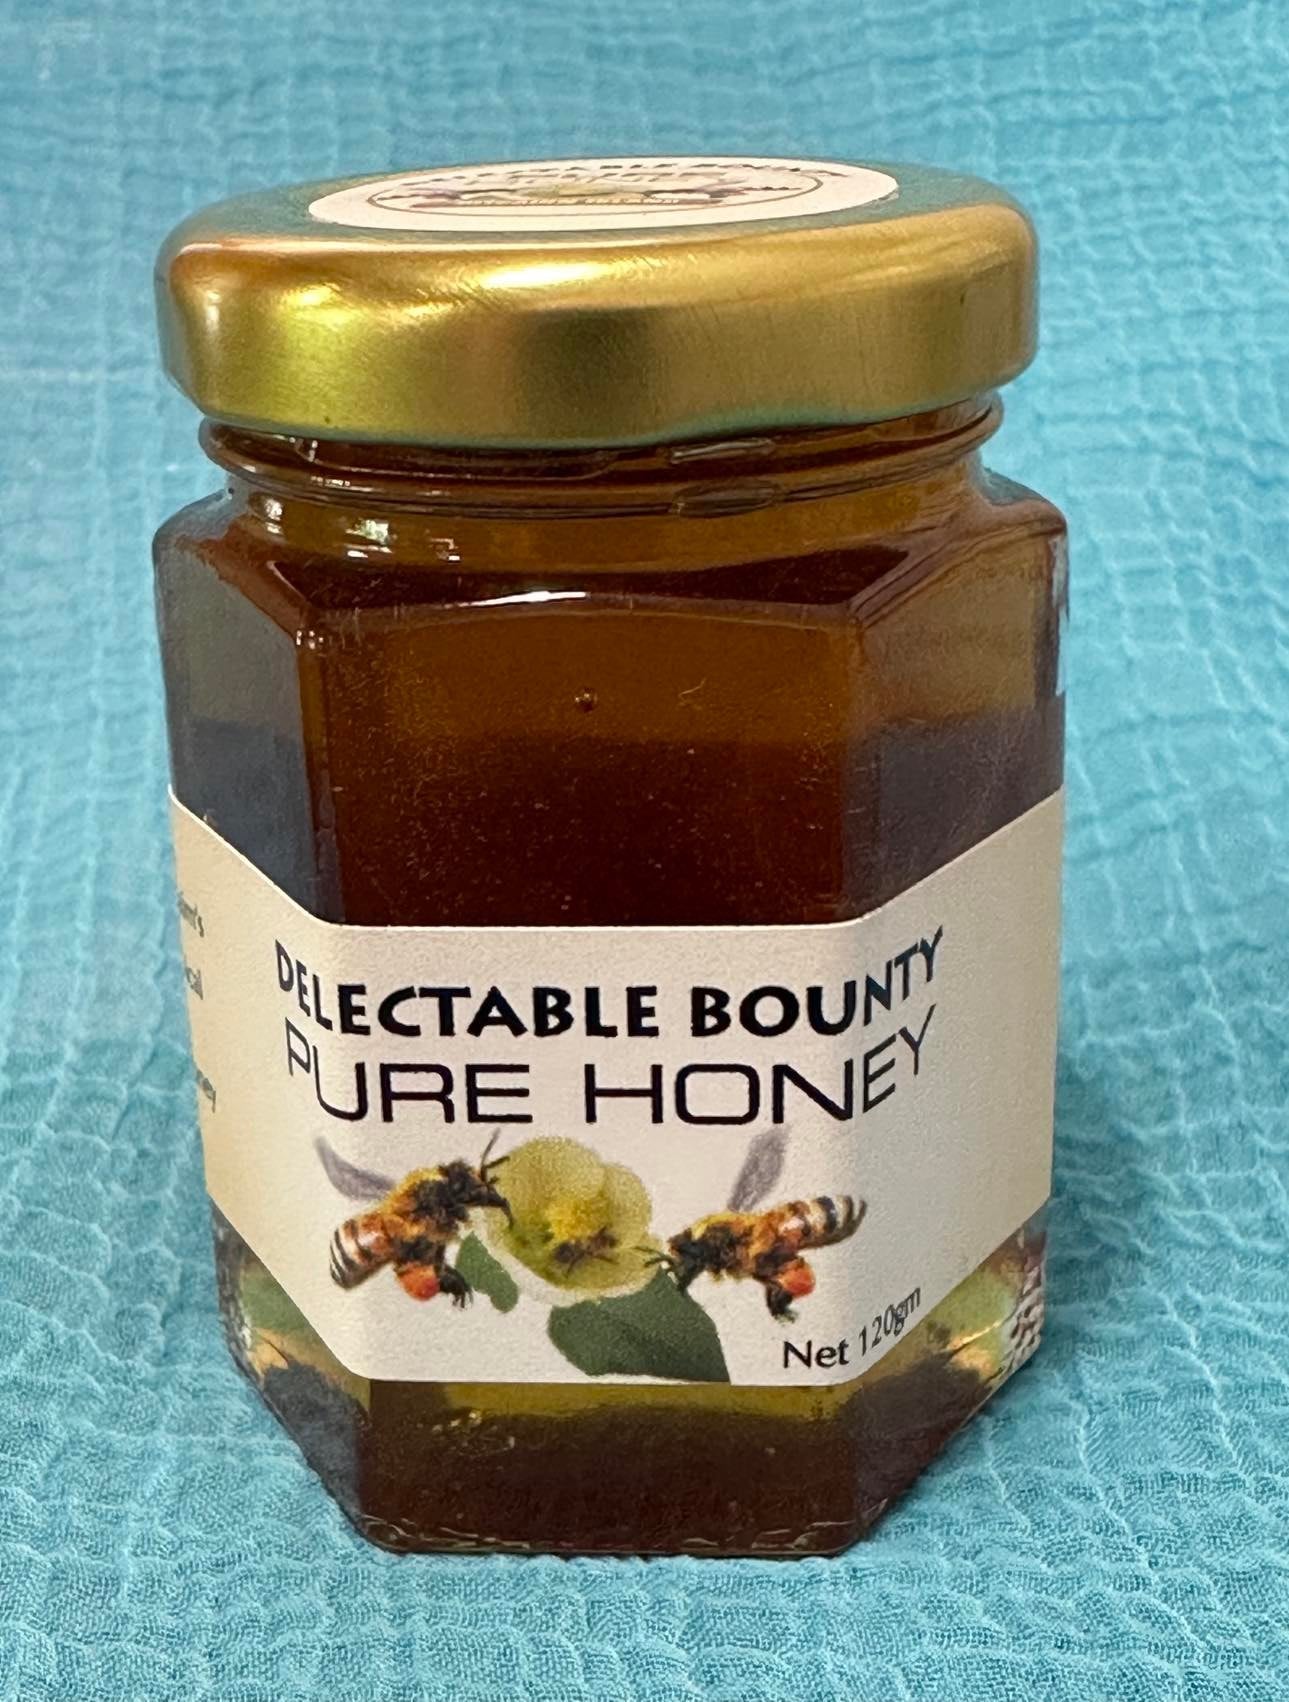 Pure Pitcairn Island Honey av Delectable Bounty - 250gm